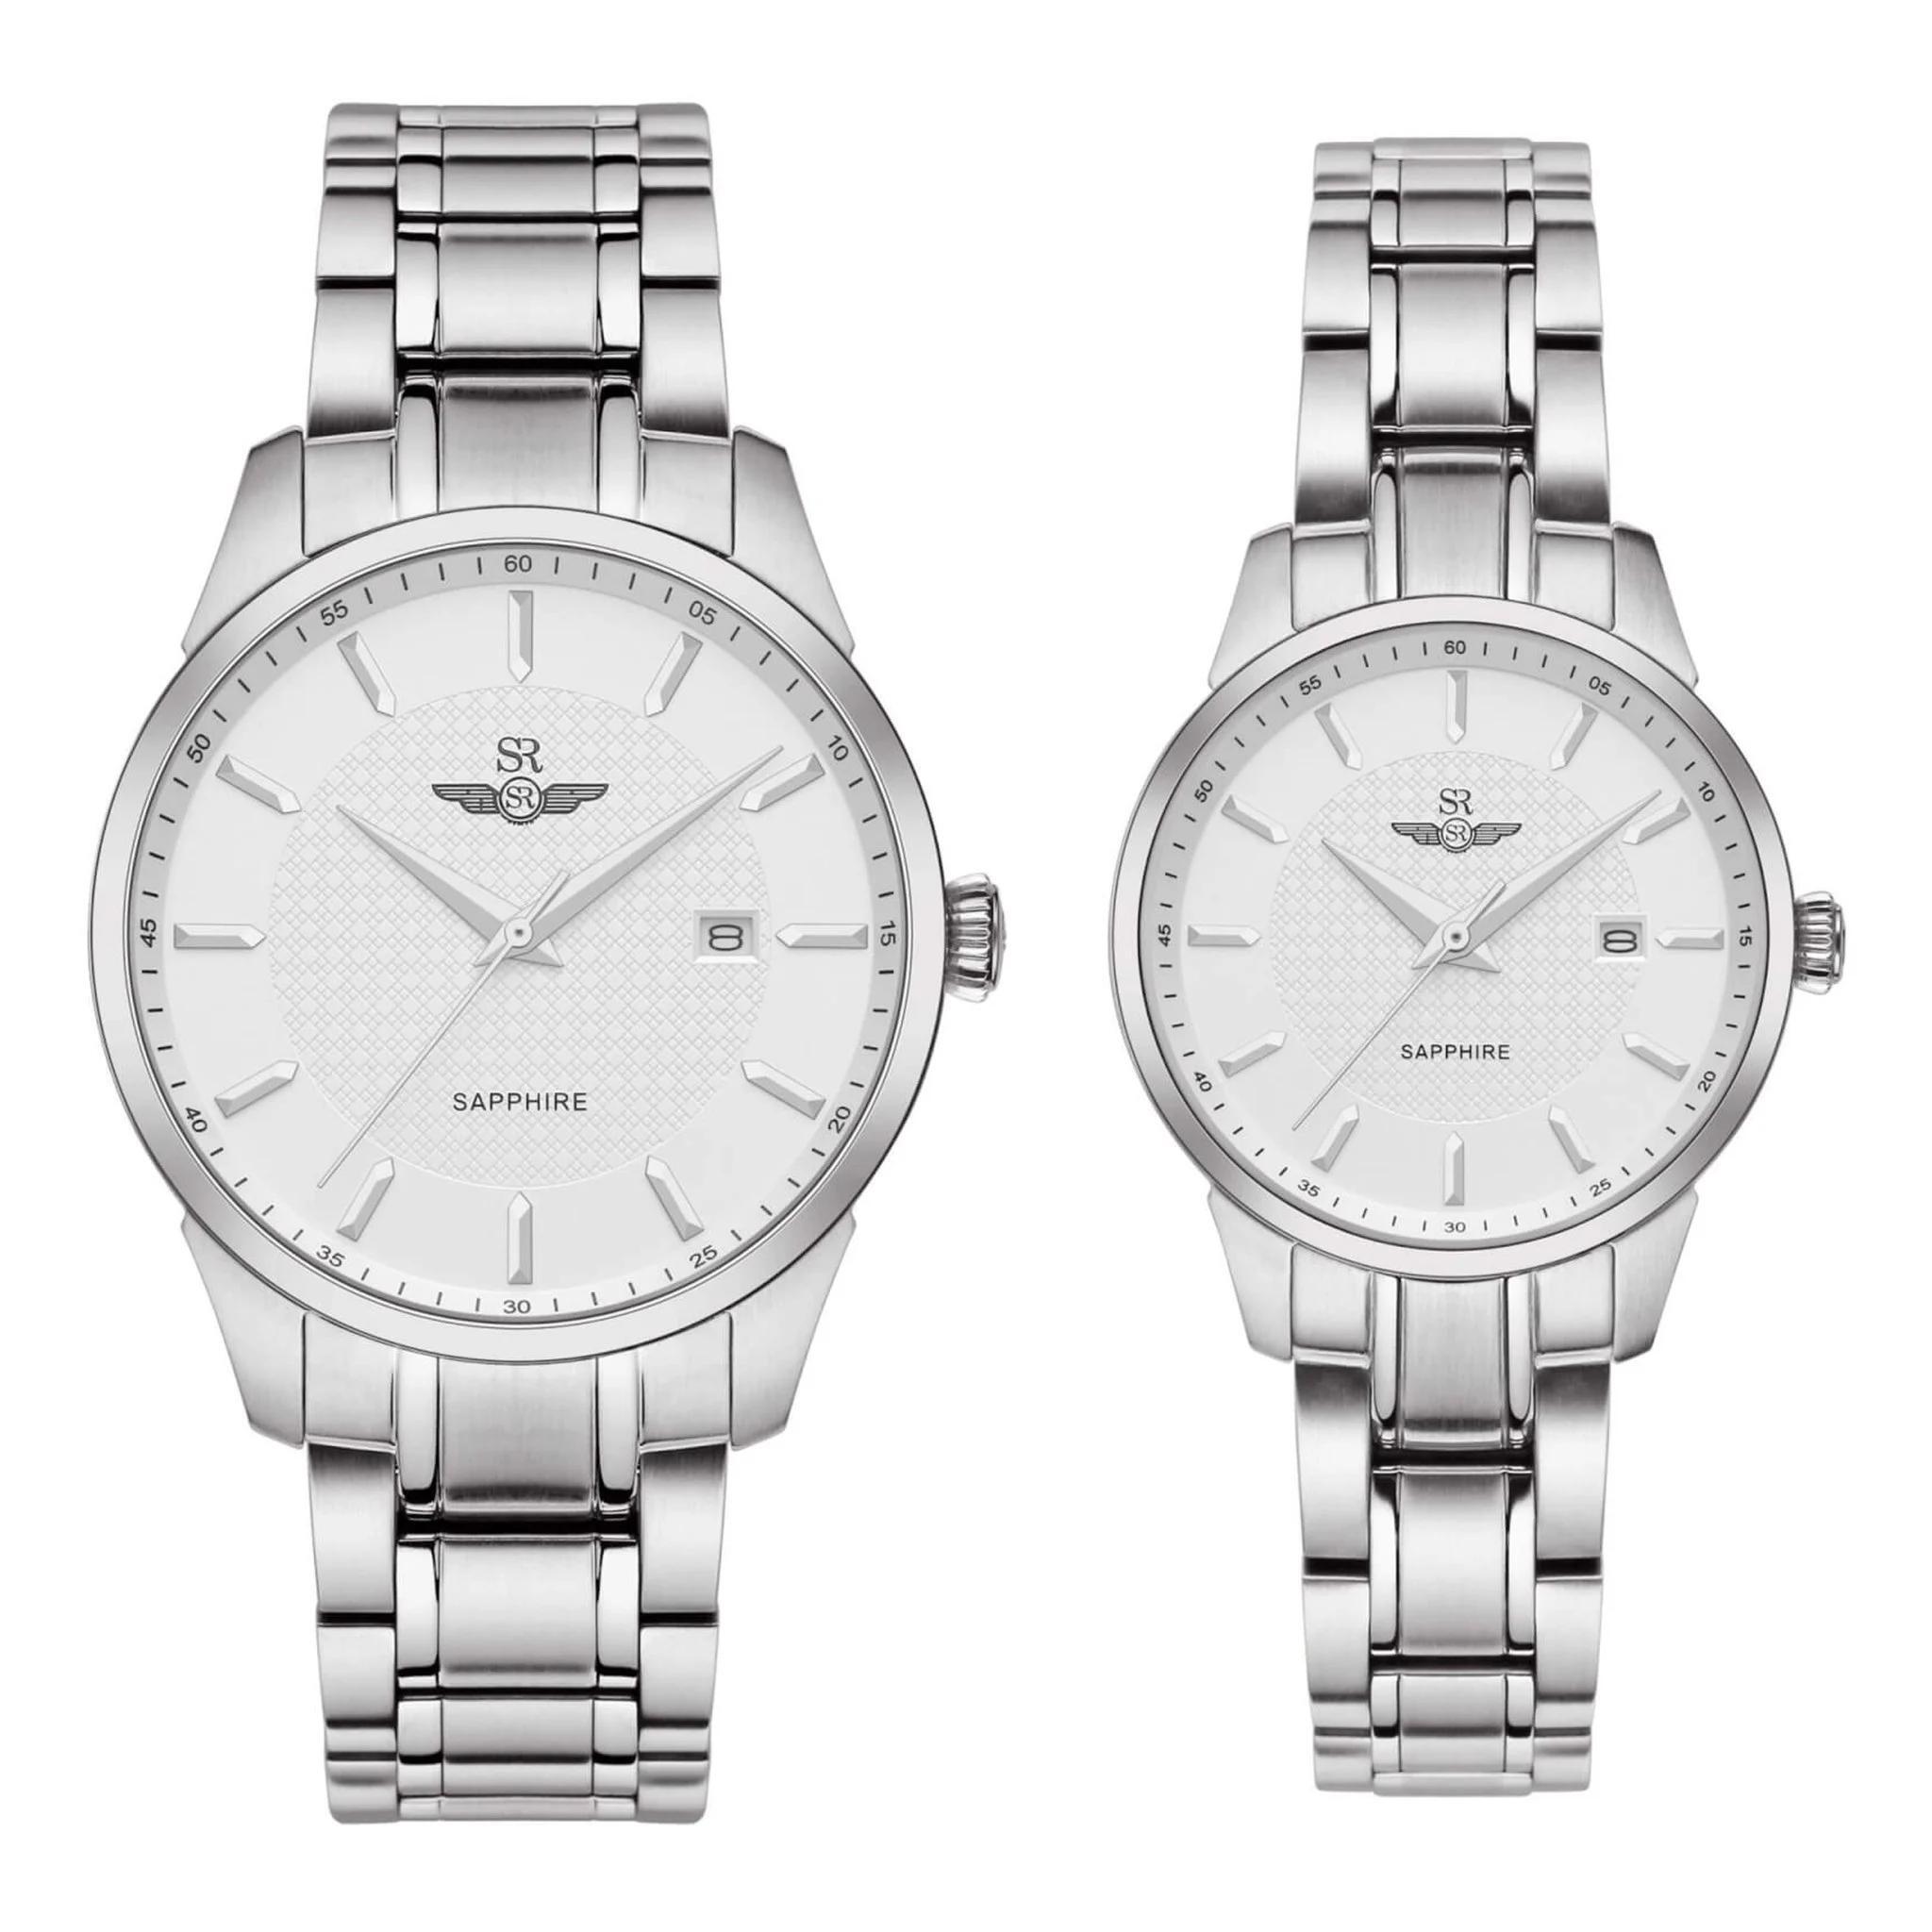 Đồng hồ đôi Srwatch Couple-F SG80081.1102CF